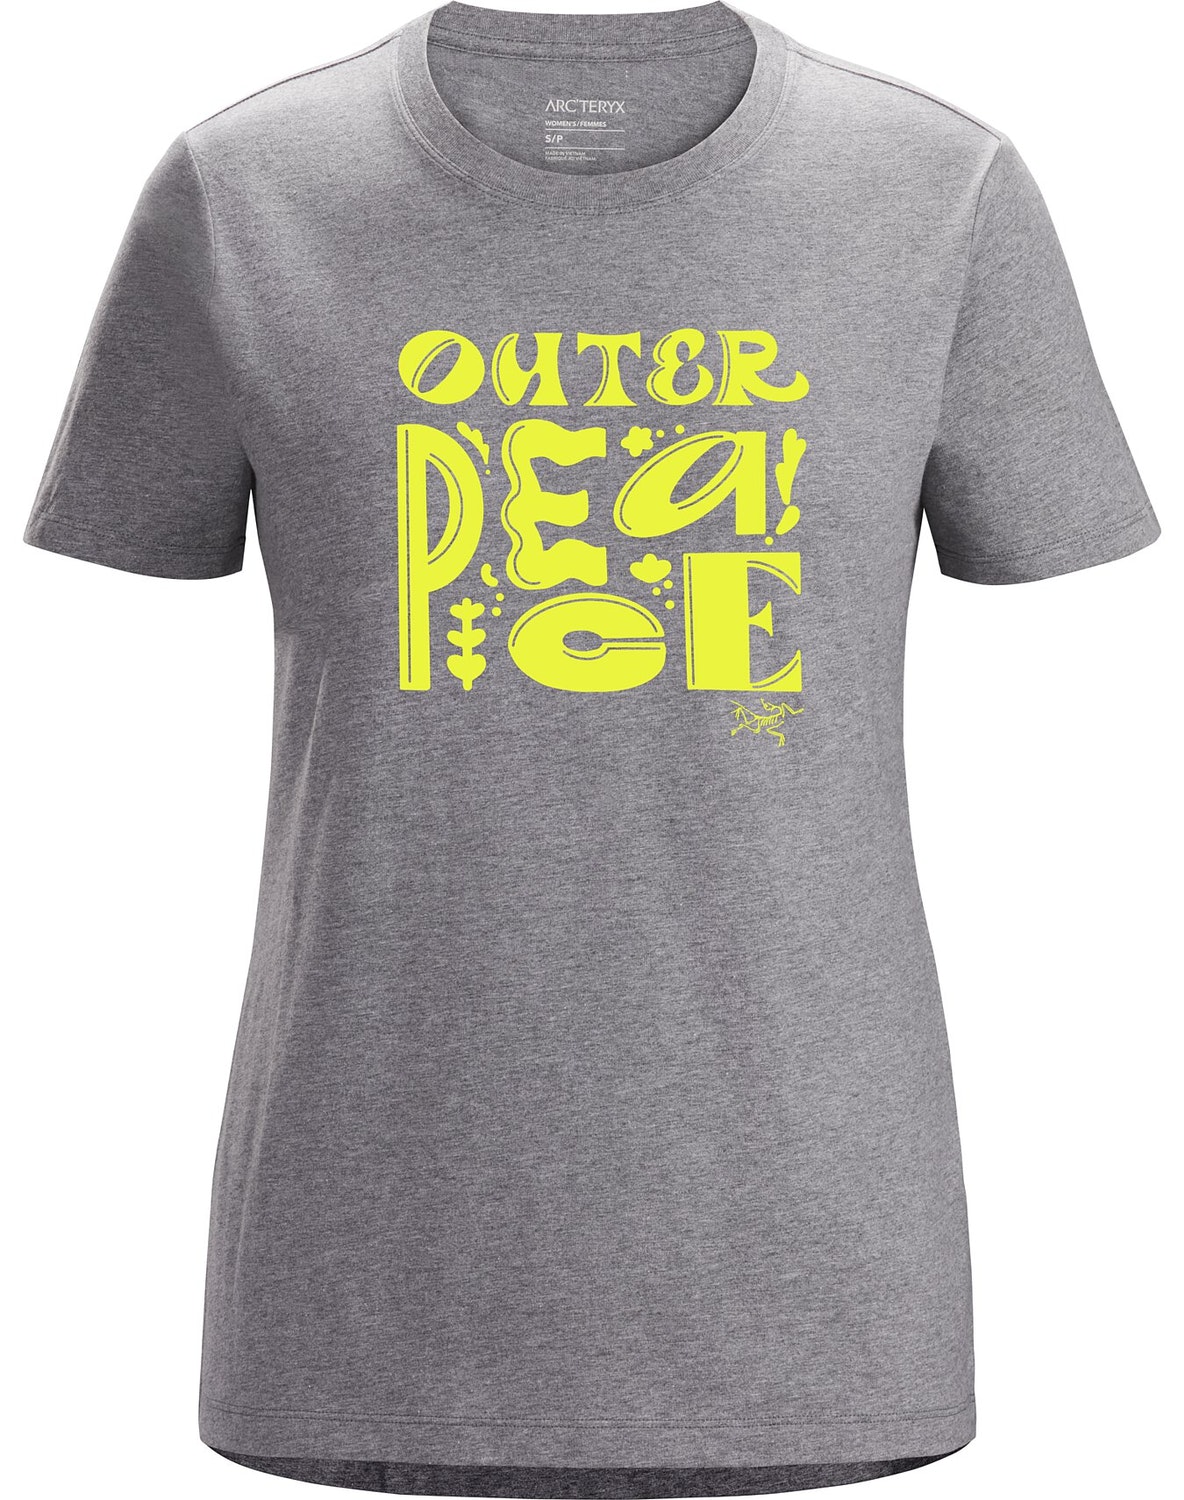 T-shirt Arc'teryx Outer Peace Donna Grigie - IT-3914615